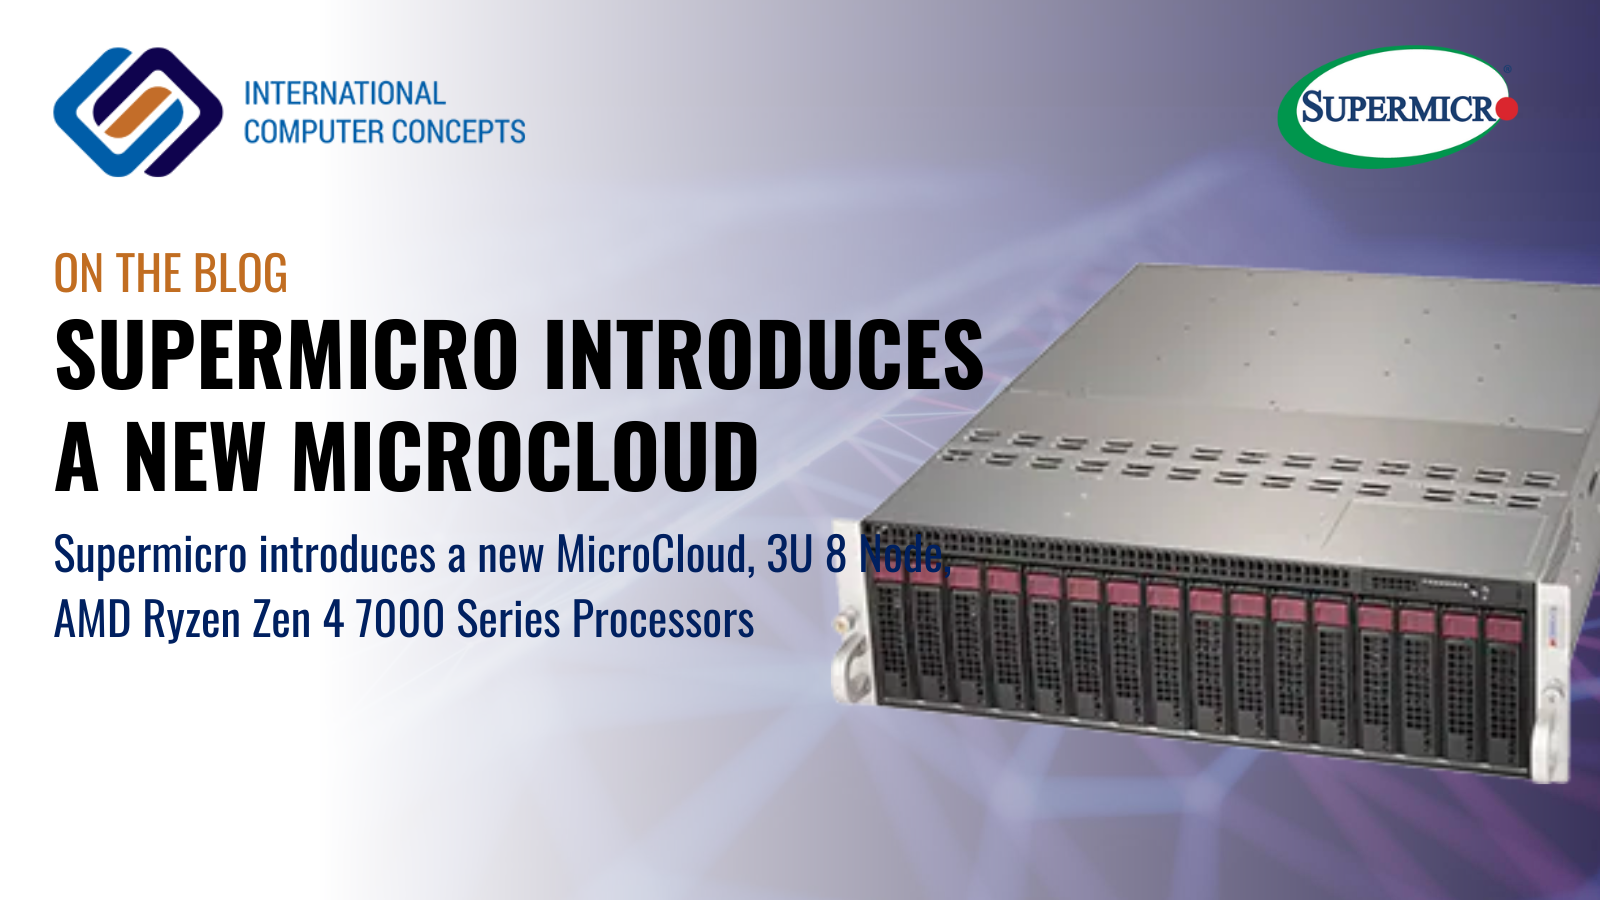 Supermicro introduces a new MicroCloud, 3U 8 Node, AMD Ryzen Zen 4 7000 Series Processors